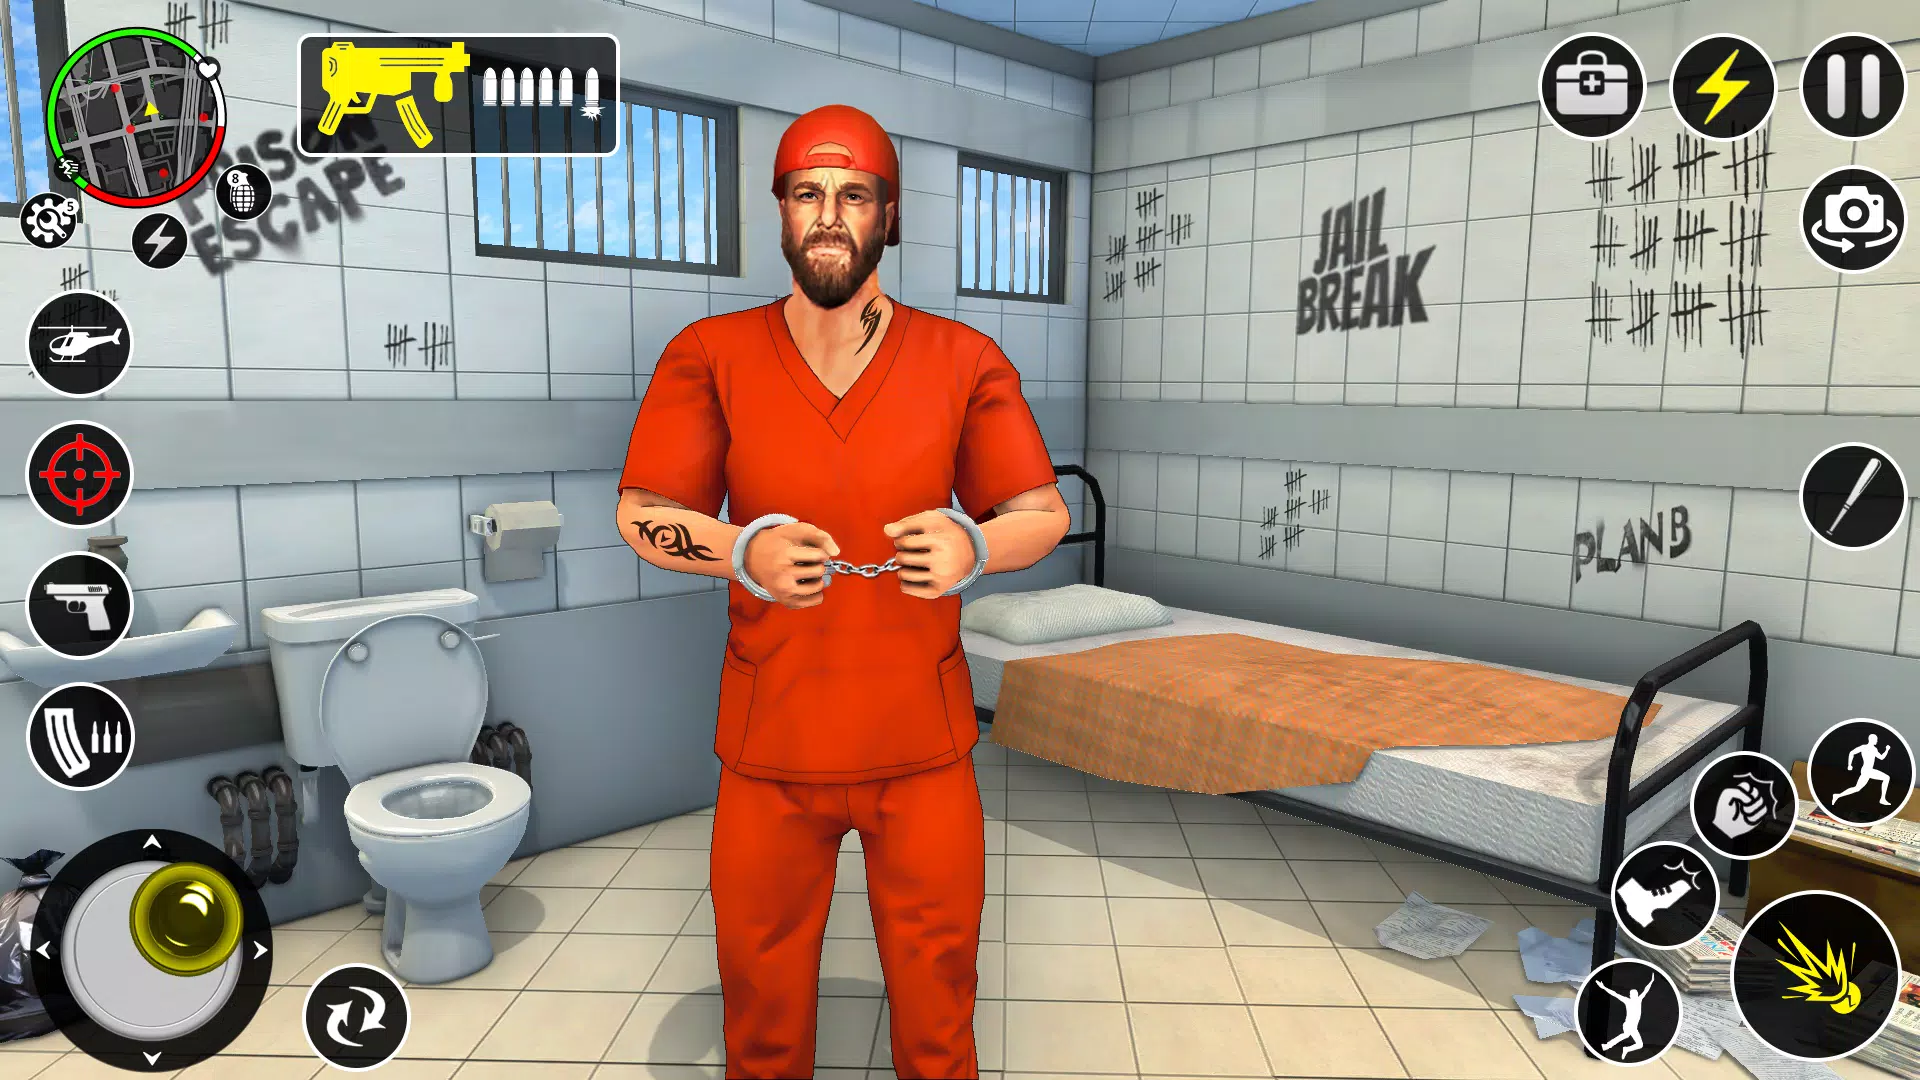 Jailbreak Prison Escape Survival Rublox Runner Mod - APK Download for  Android